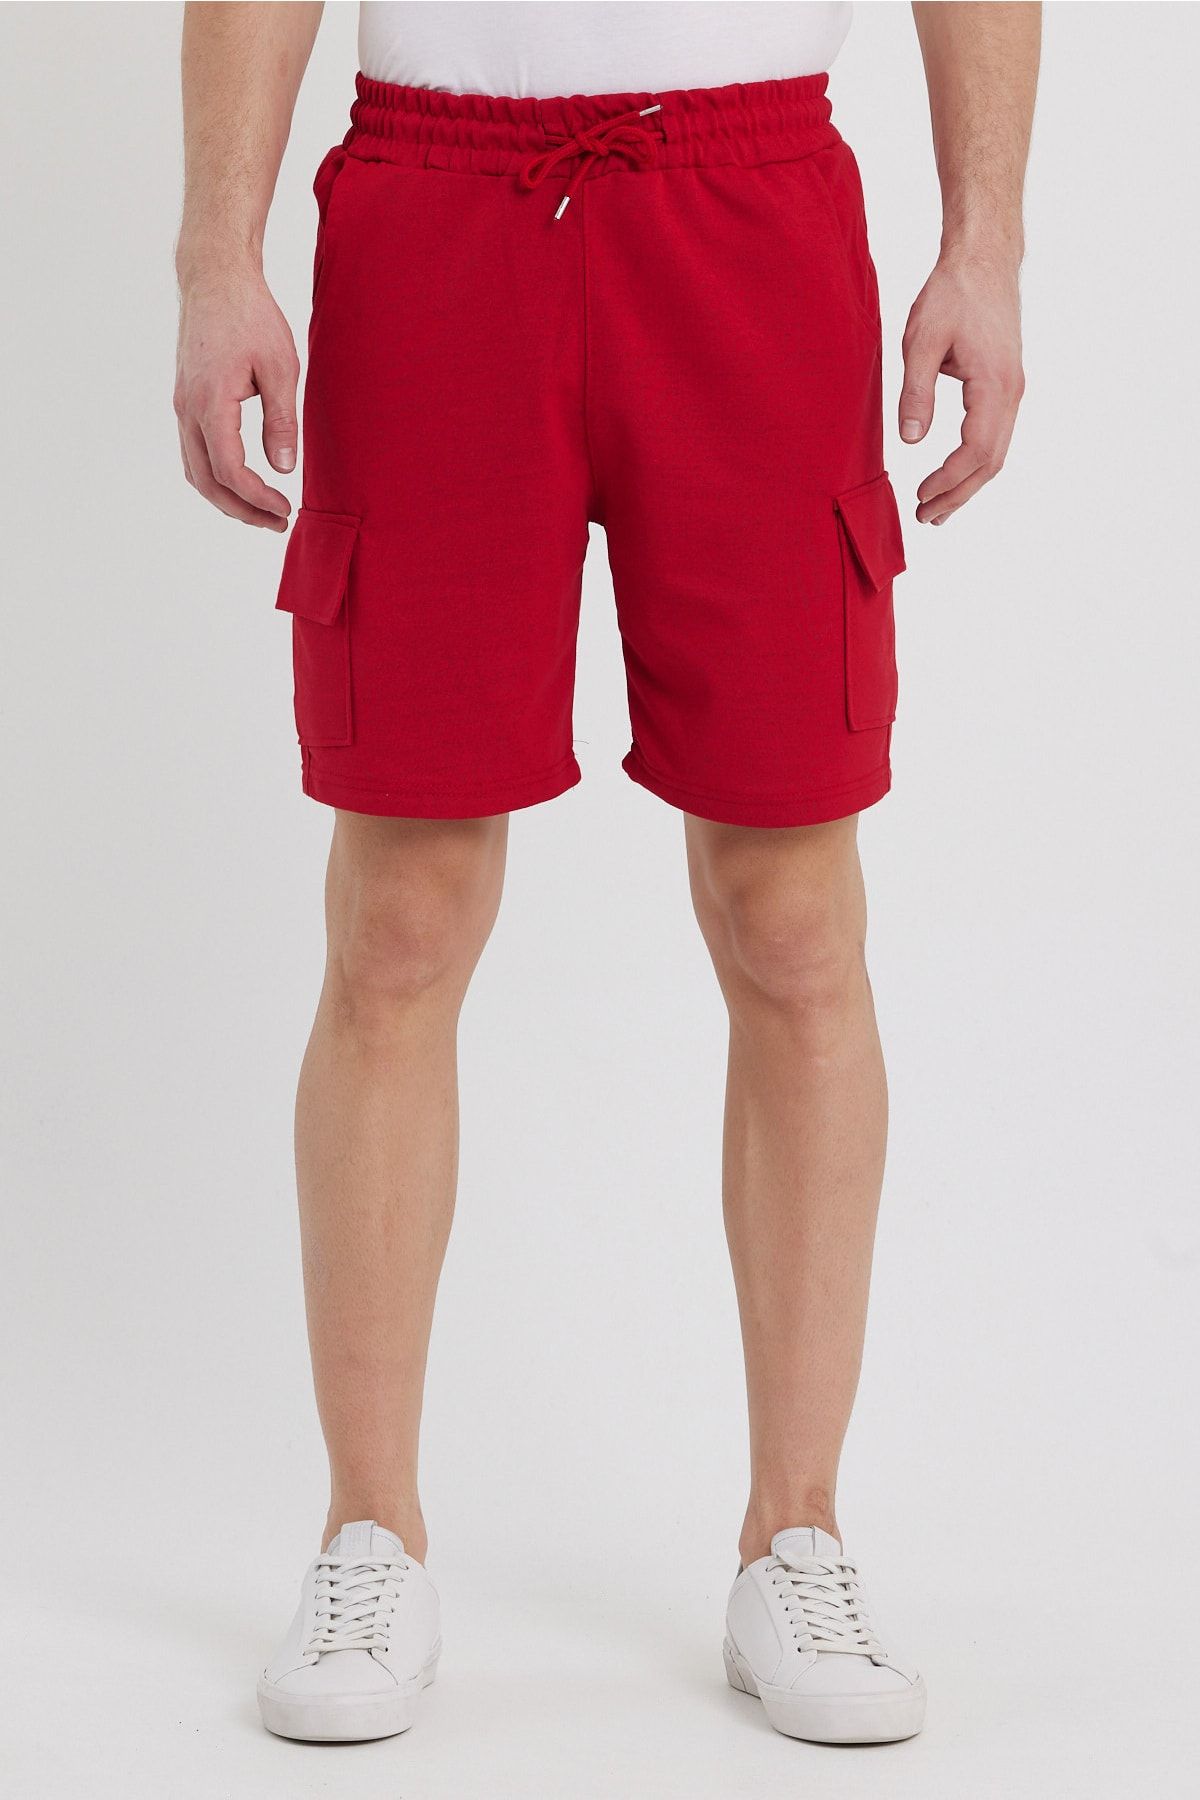 Rodi Jeans Rodi Kırmızı Kargo Cep Penye Renkli Kapri Şort Ty21ye130150